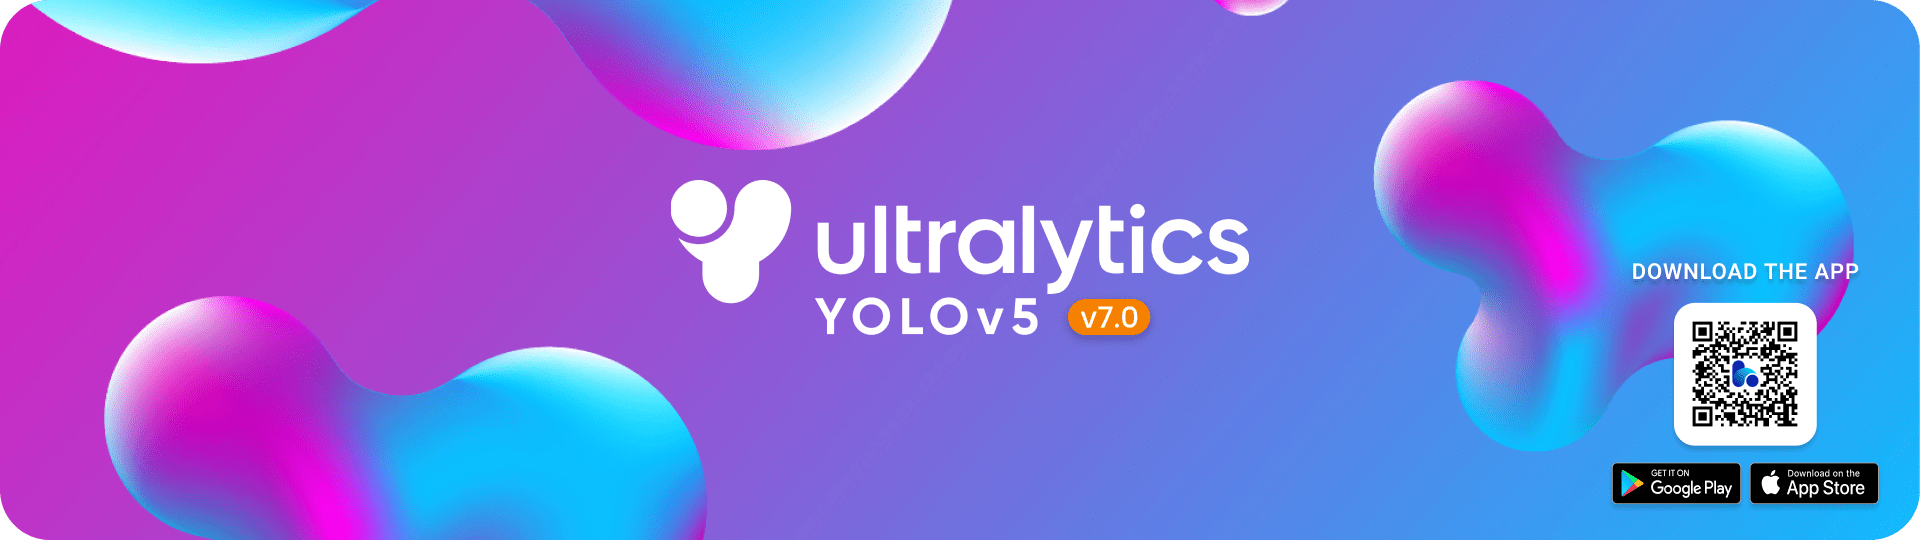 Ultralytics YOLOv5 v7.0 рдмреИрдирд░